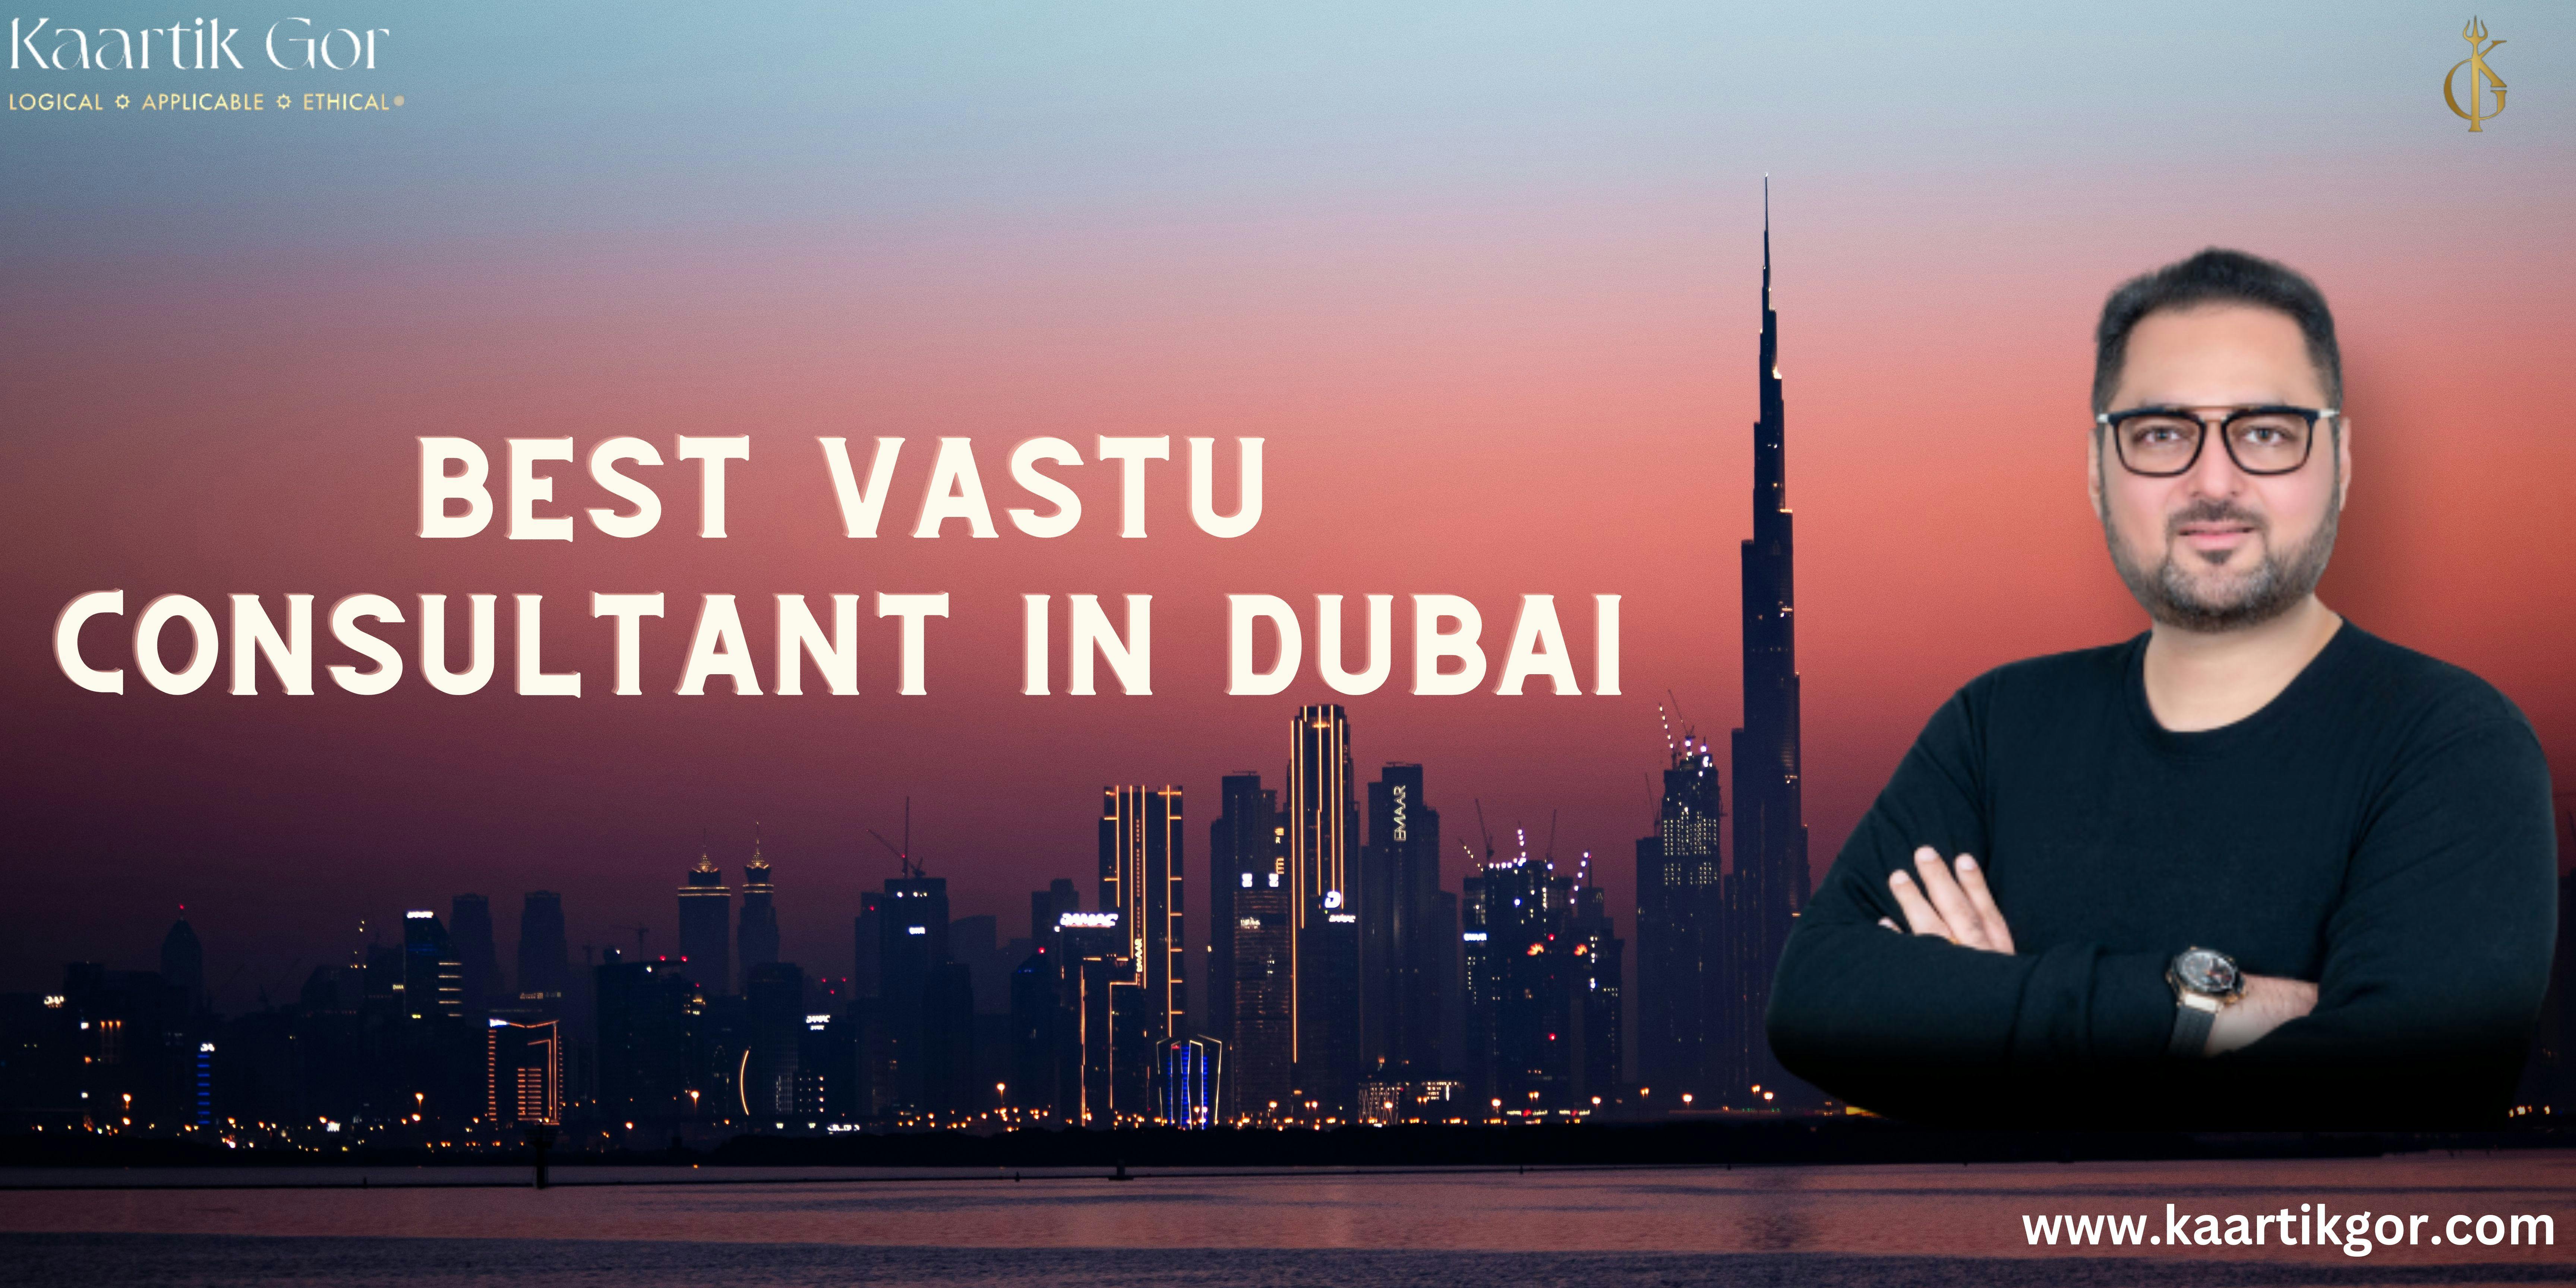 Kaartik Gor - Best Vastu Consultant in Dubai.jpg